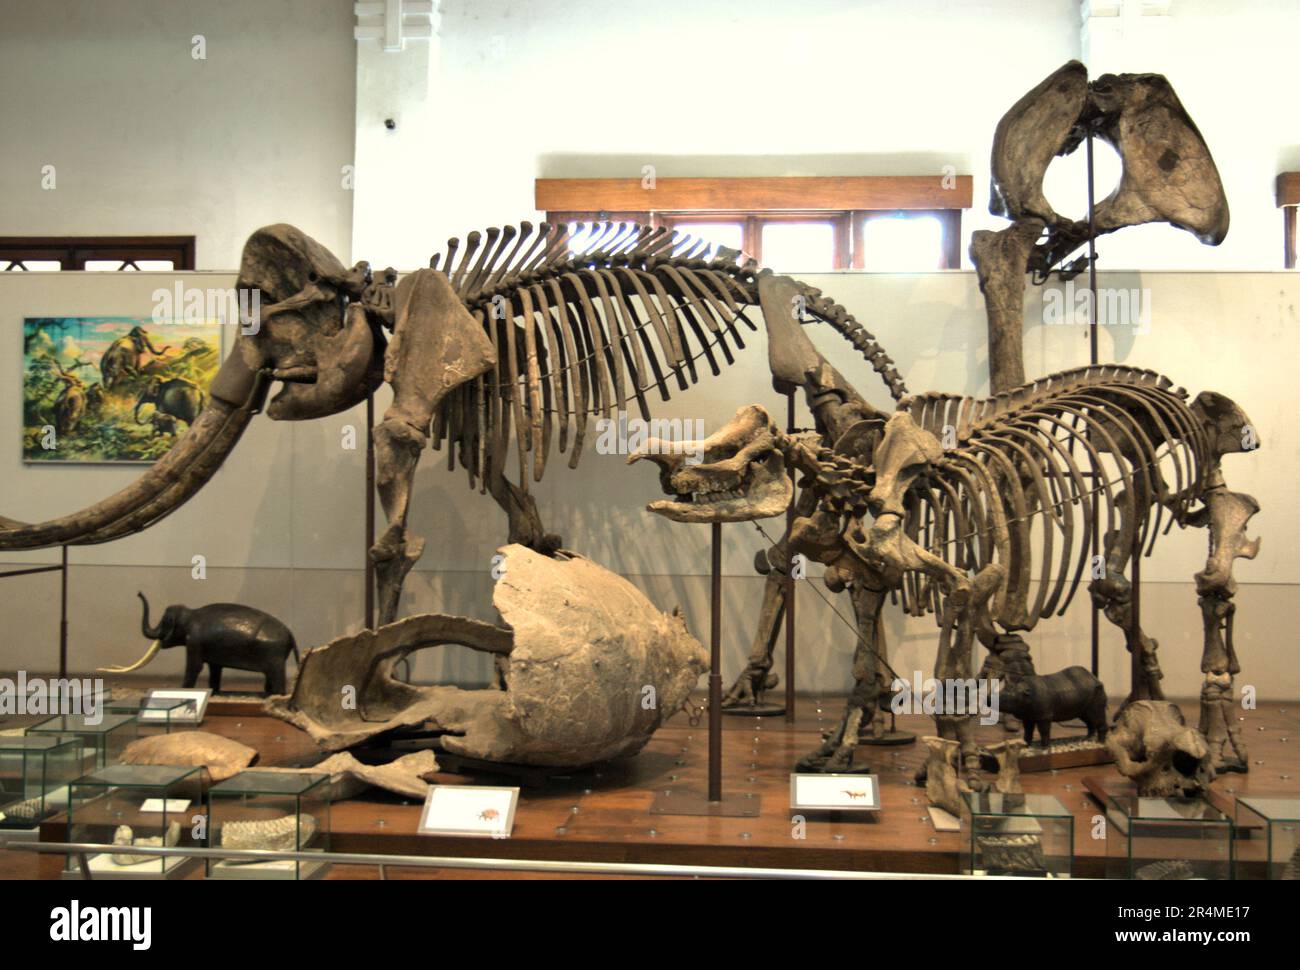 Ausstellung rekonstruierter erloschener Megafauna im Museum Geologi (Geologiemuseum) in Bandung, West-Java, Indonesien. Stockfoto